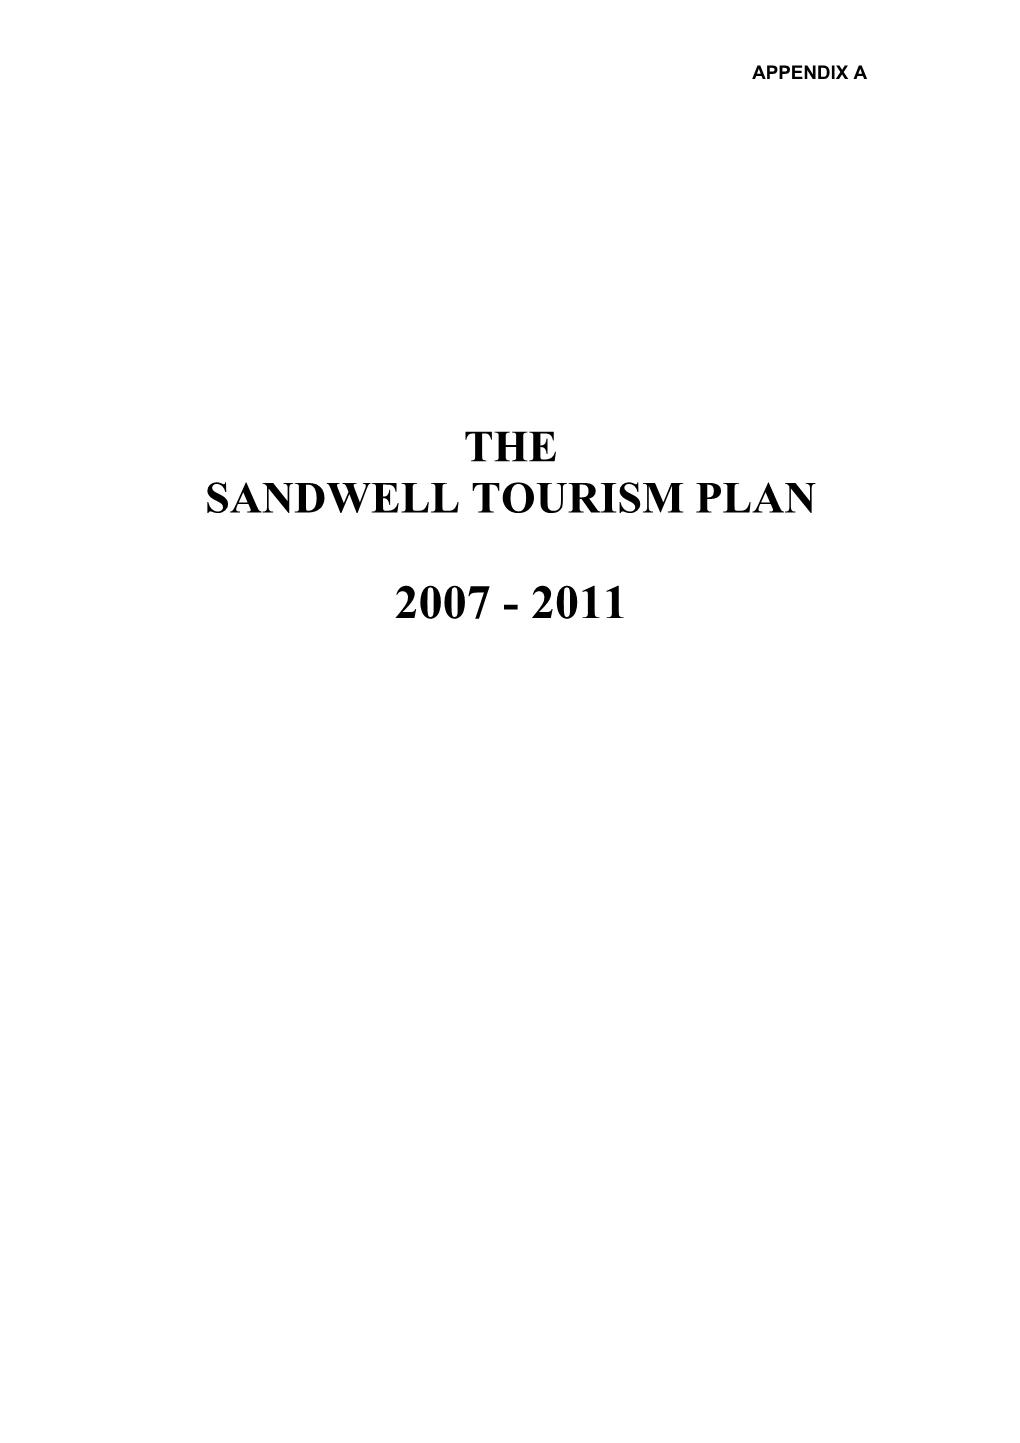 The Sandwell Tourism Plan